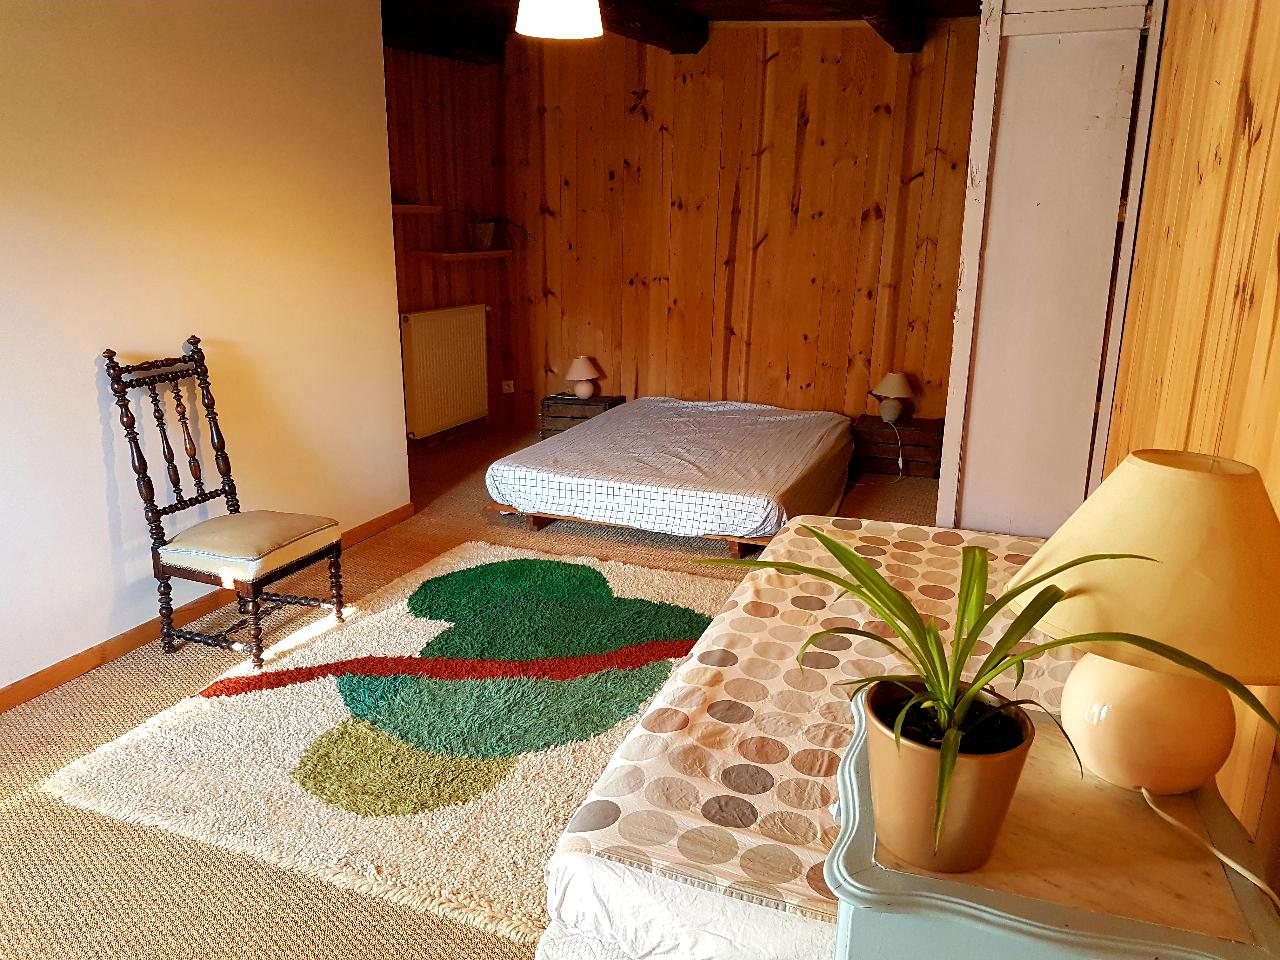 Logement GreenGo: Appart'chambre - Chambres d'hôtes écologique - Image 4